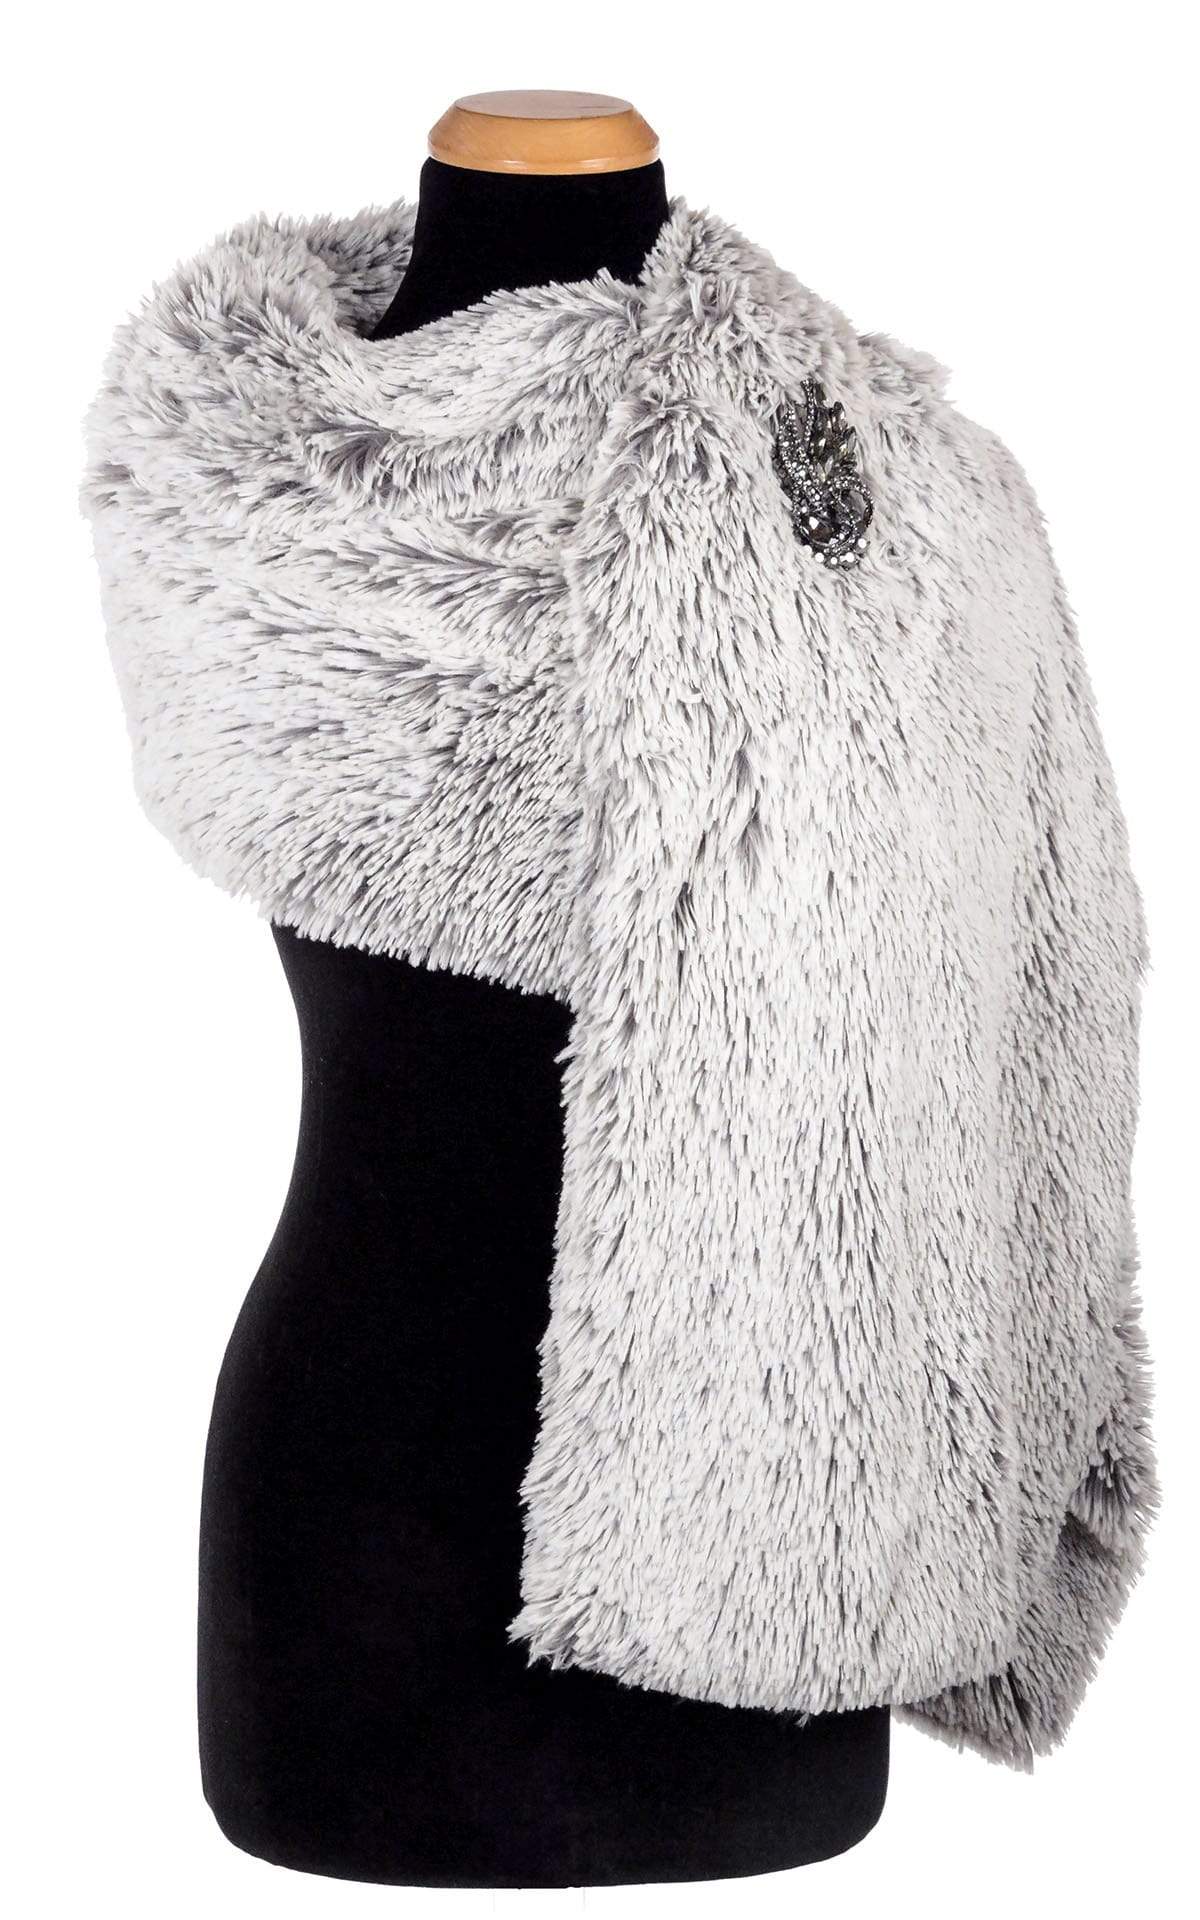 Stole with Rhinestone Brooch | Pearl Fox Faux Fur | handmade in Seattle, WA by Pandemonium Millinery USA